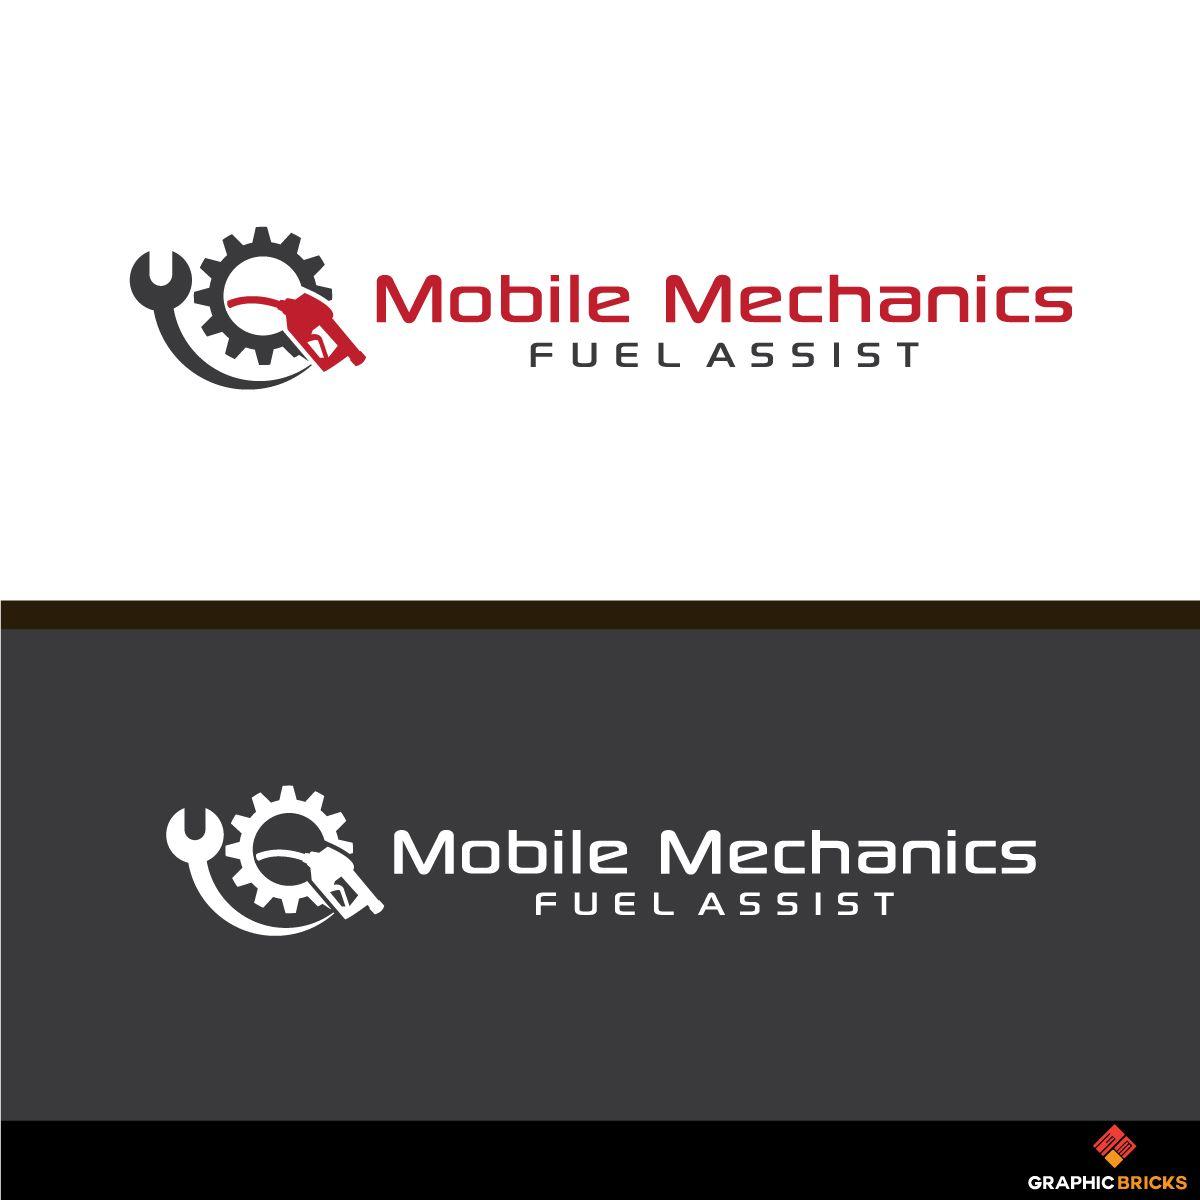 Mobile Mechanic Logo - Bold, Masculine, Mechanic Logo Design for 1) A1 Pride Mobile